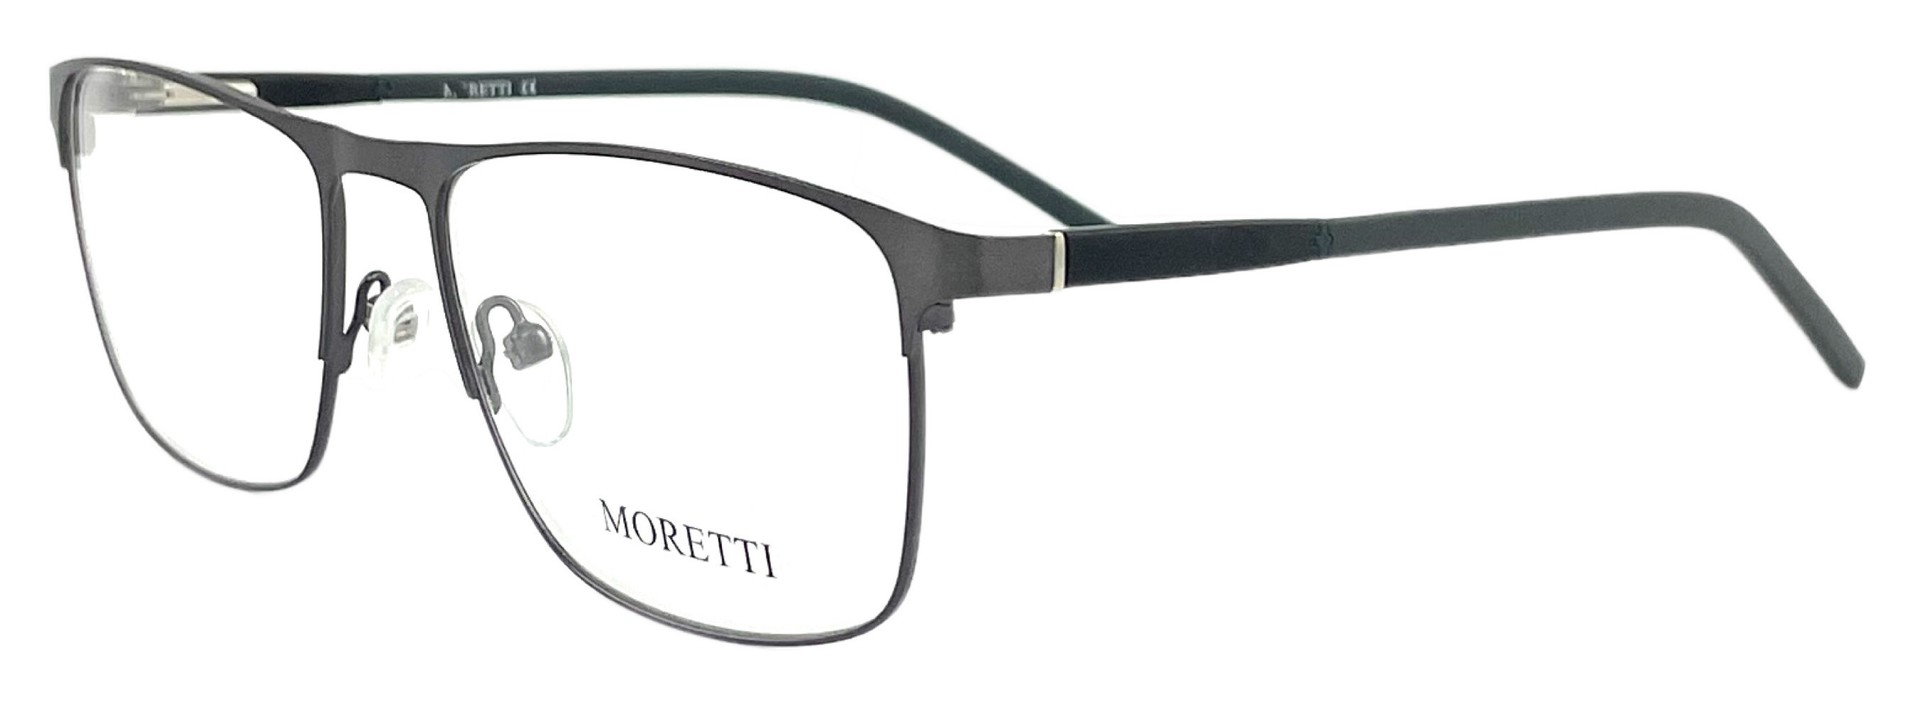 Moretti HE01-02 C3A-B2 2